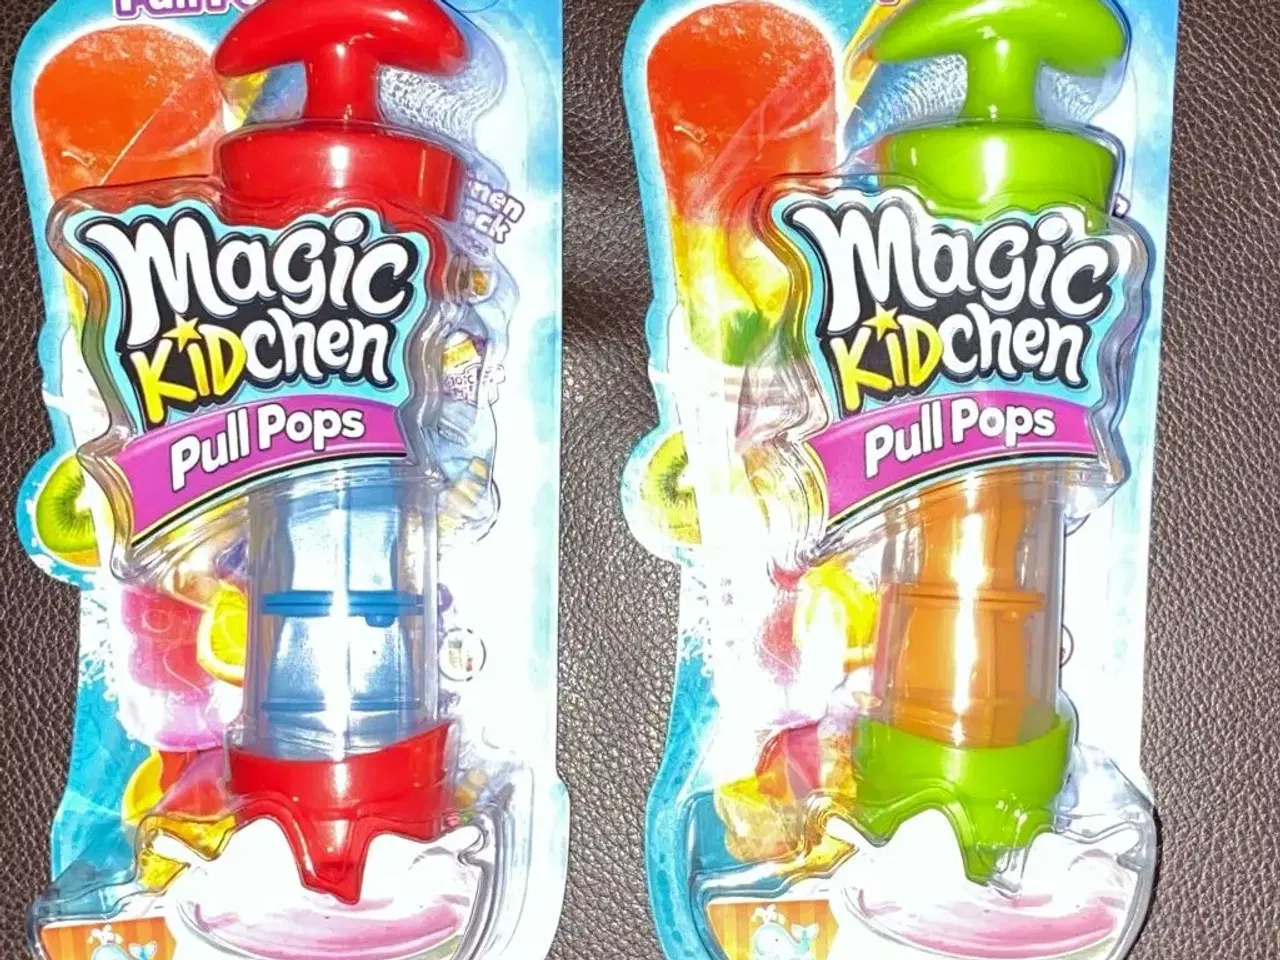 Billede 3 - Magic Kidchen Pull Pops